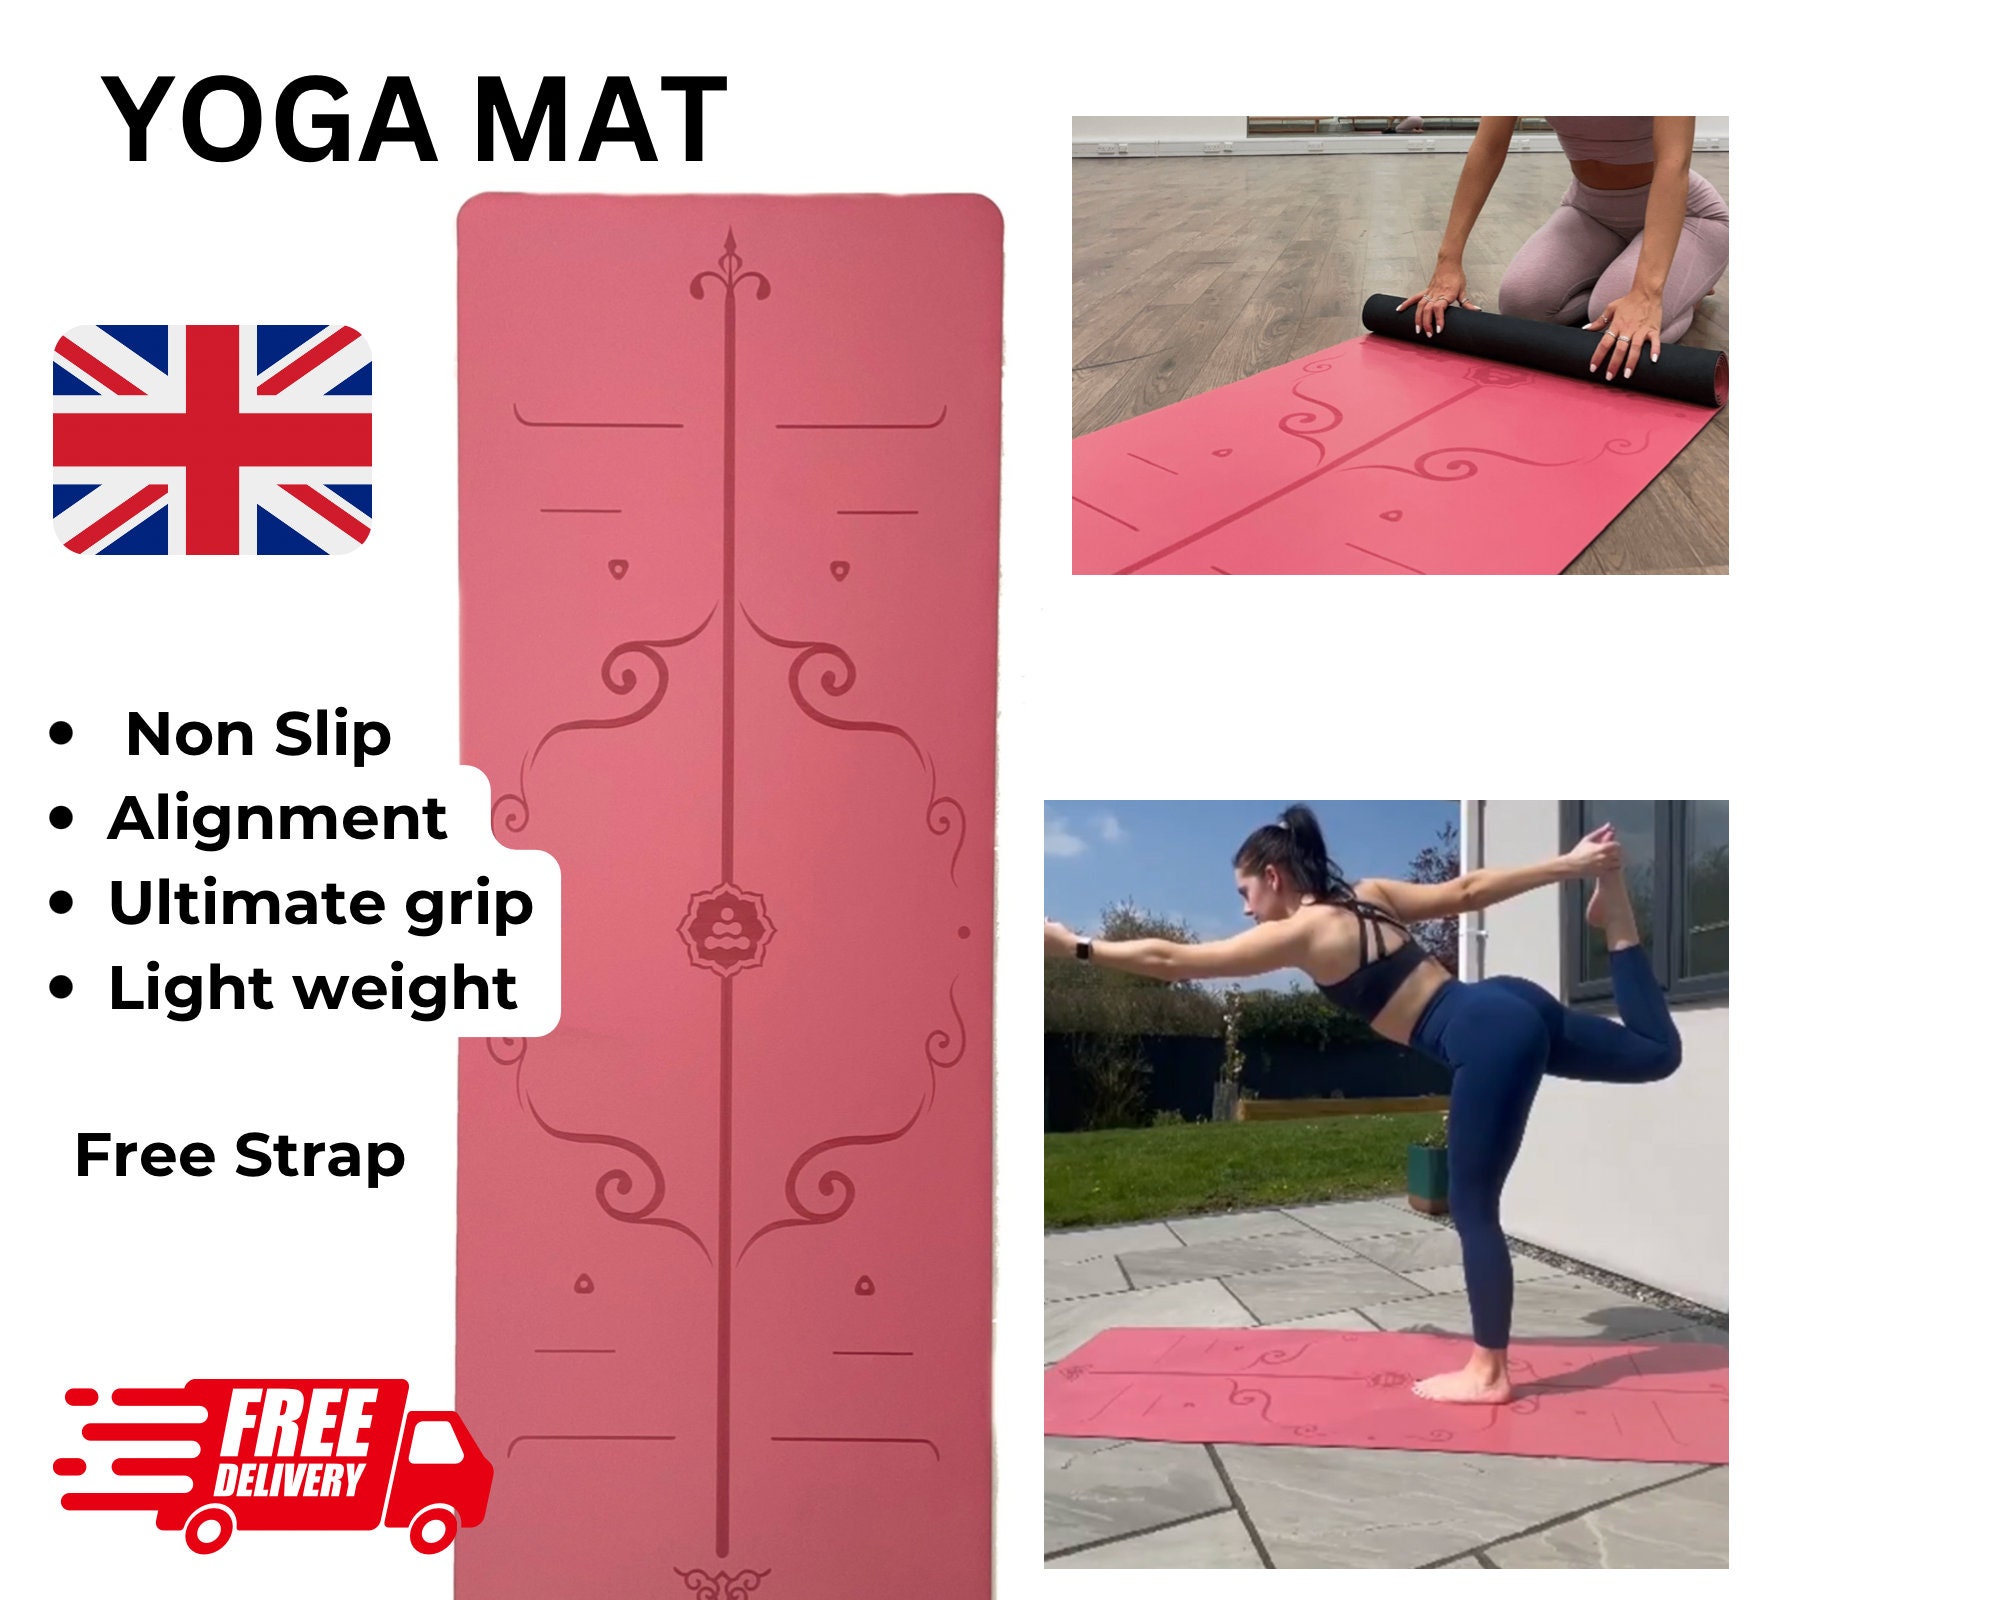 Buy Heathyoga Non Slip Yoga Mat with Alignment Marks, Yoga Mats